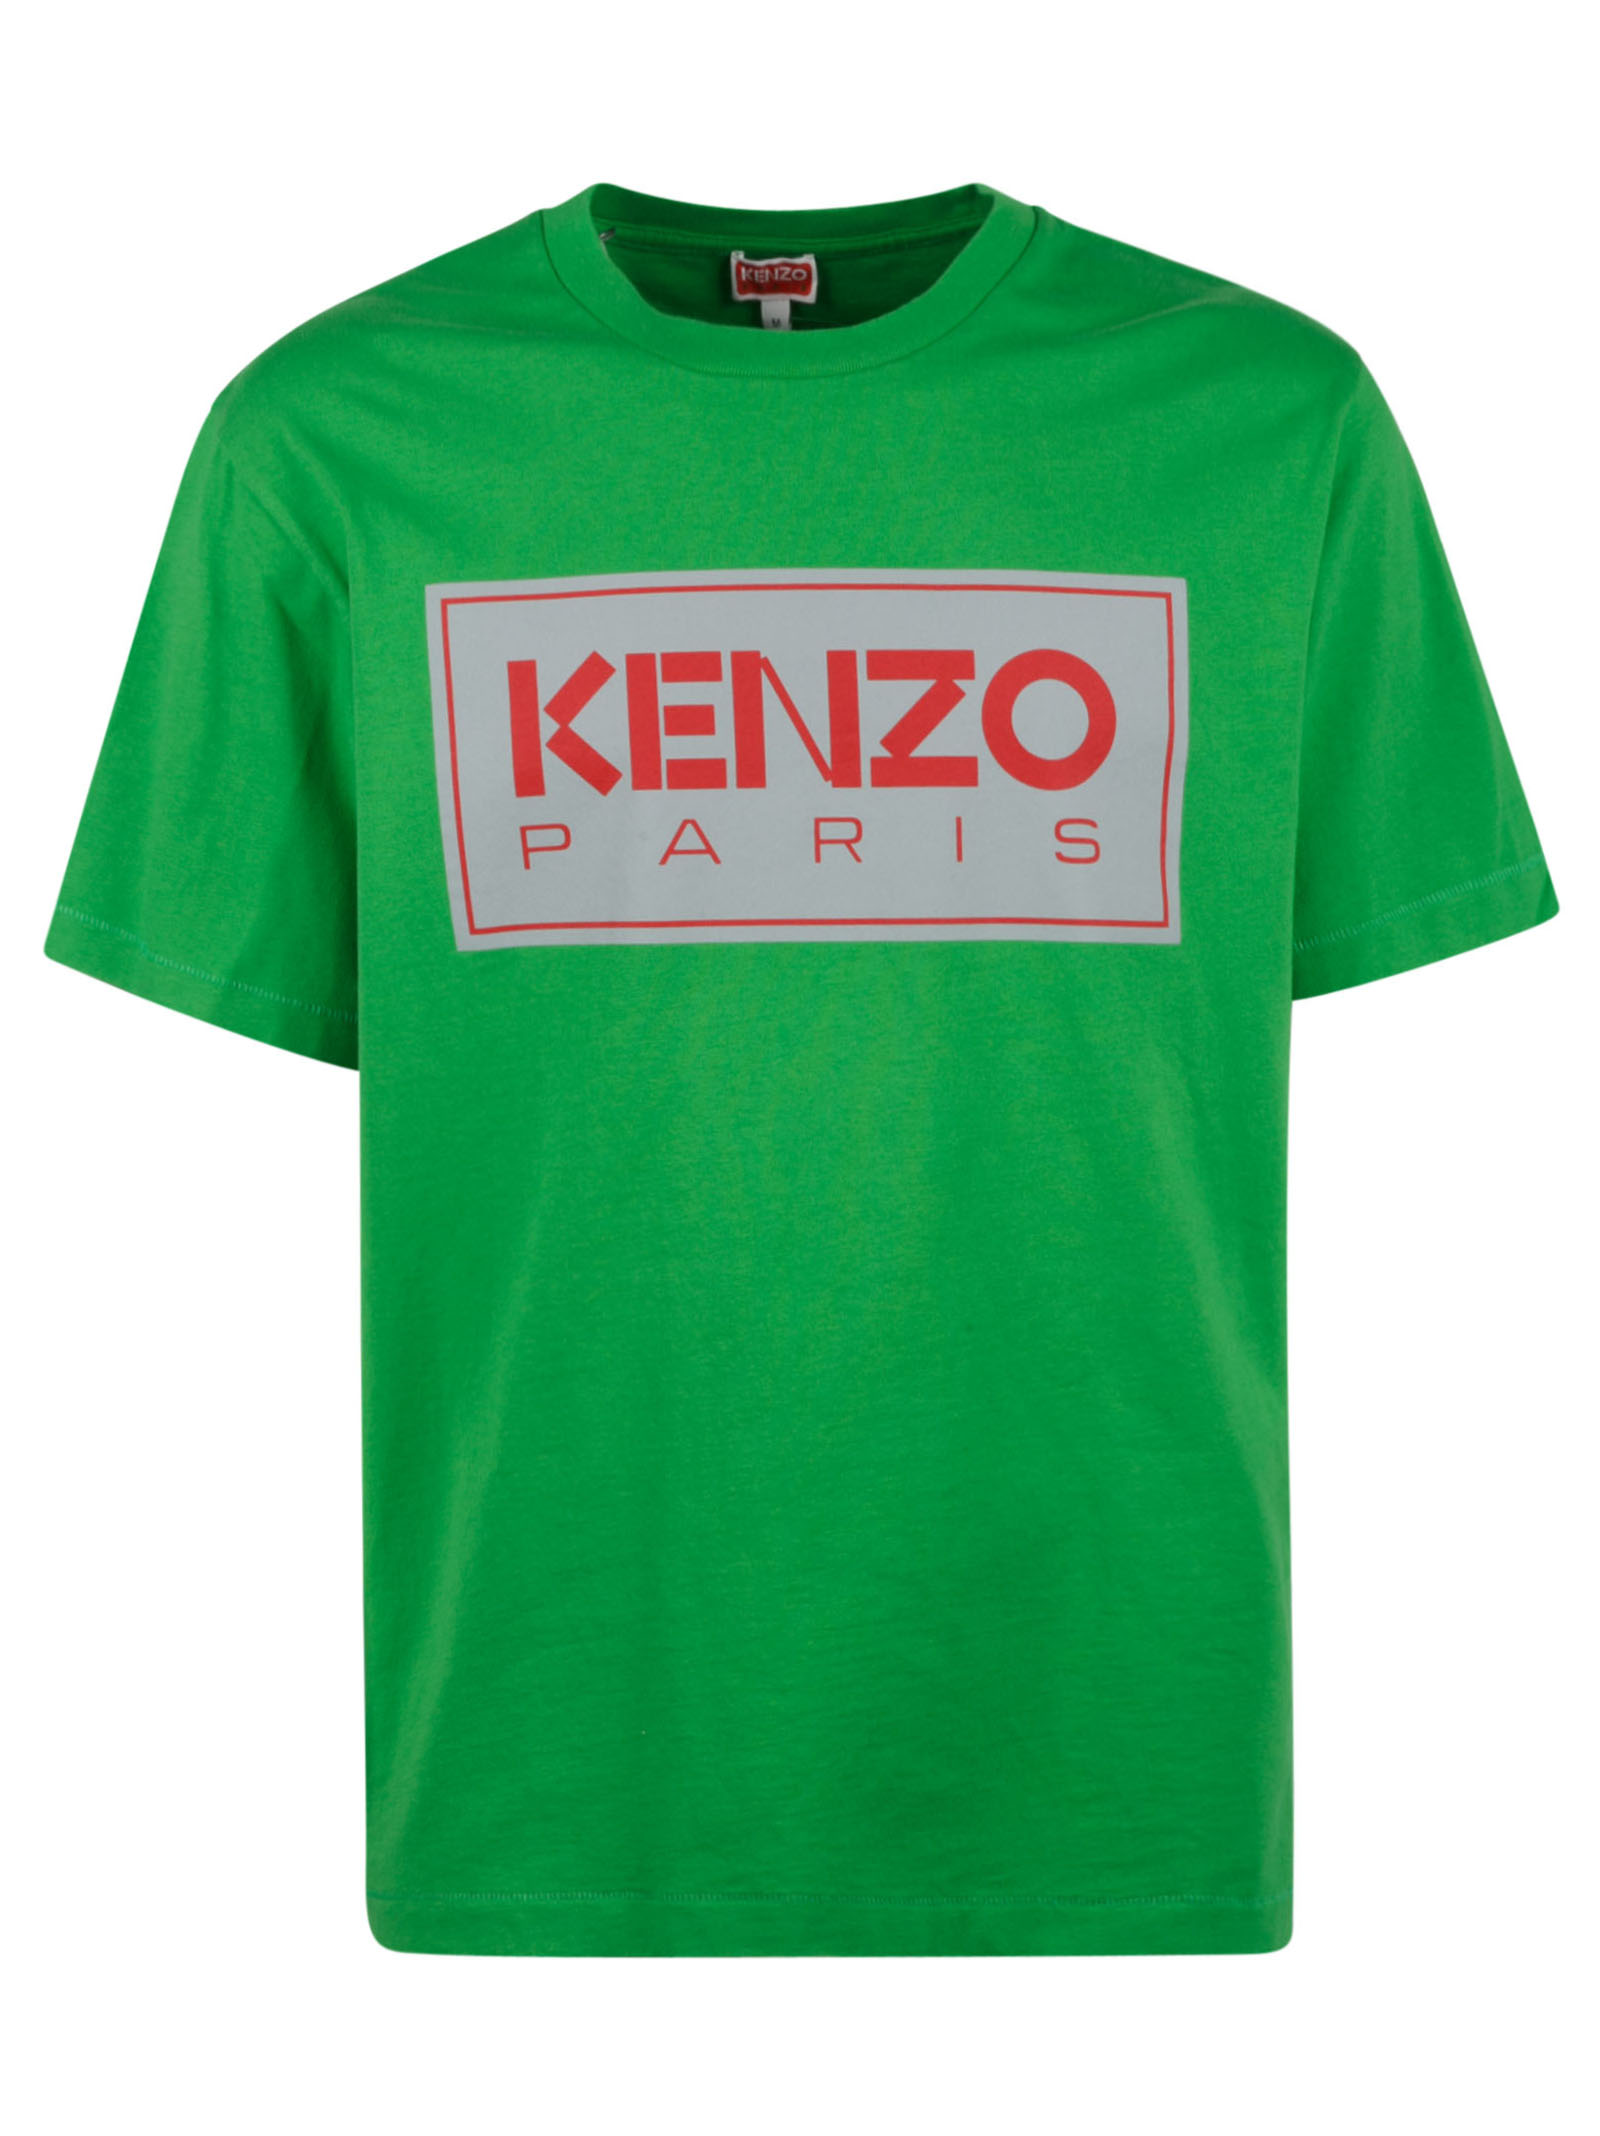 Kenzo Paris Classic T-shirt